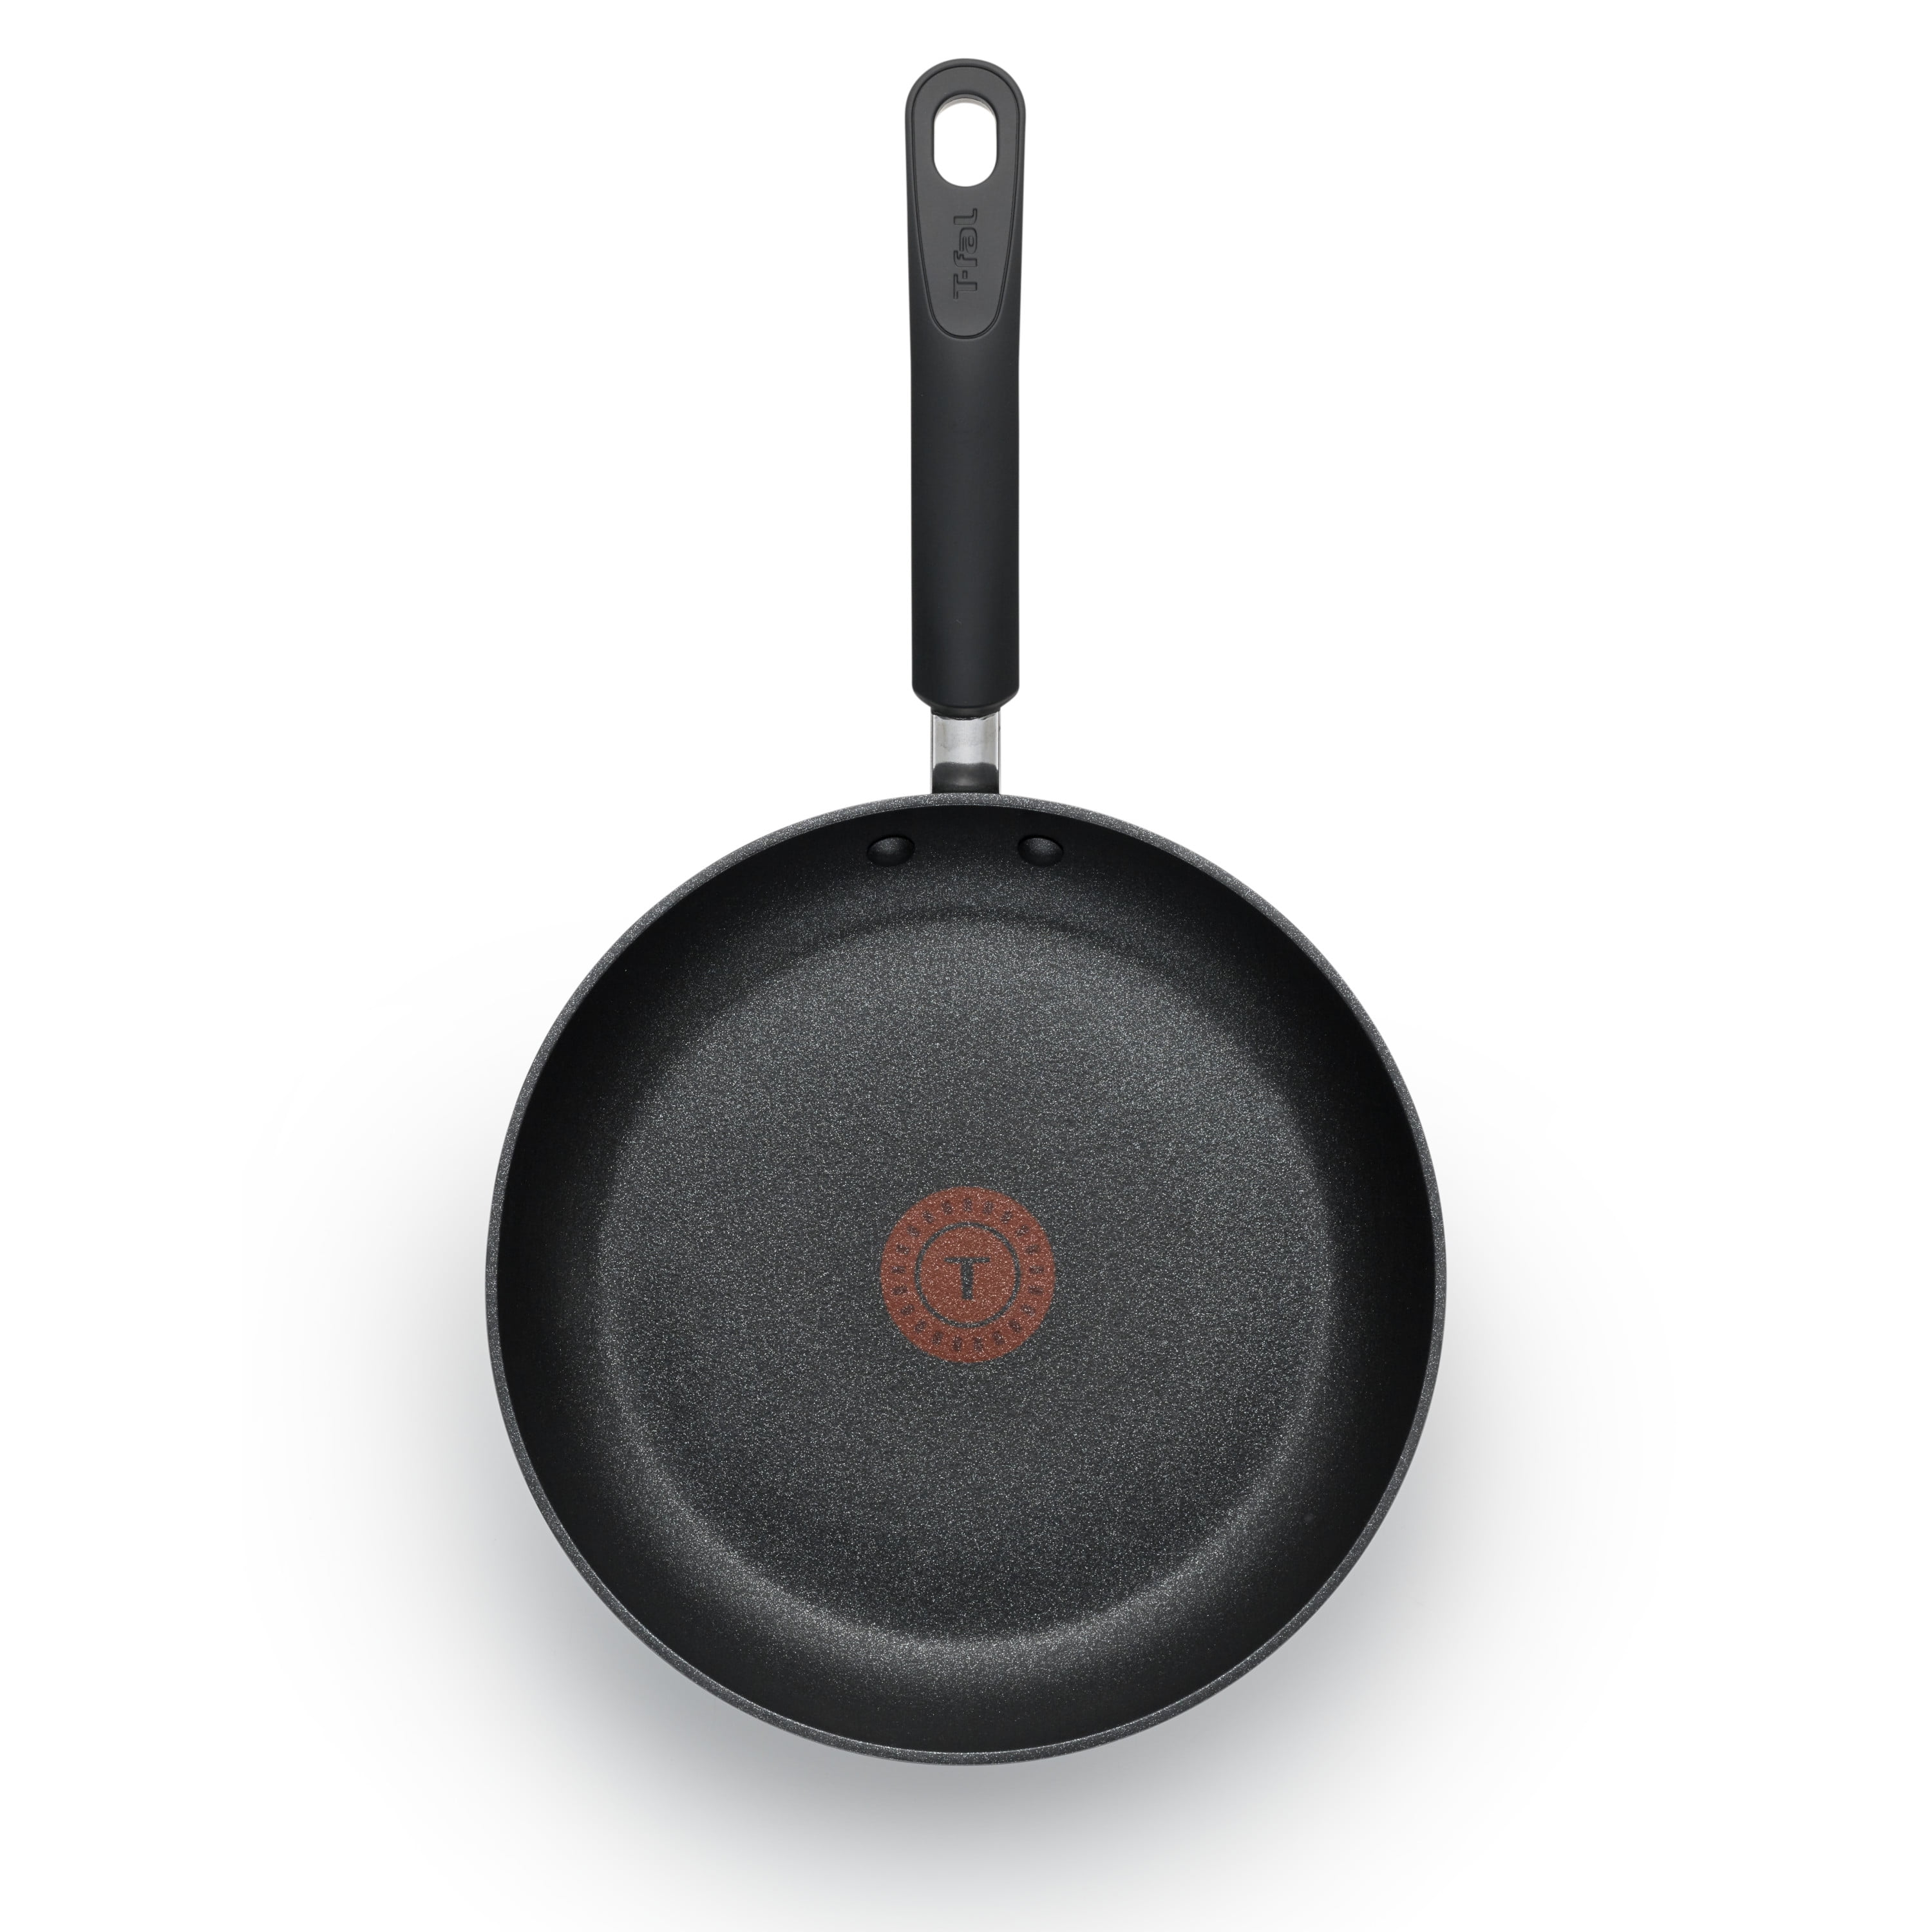 T-fal Expert Pro Nonstick Cookware, Fry Pan, 12 inch, Black